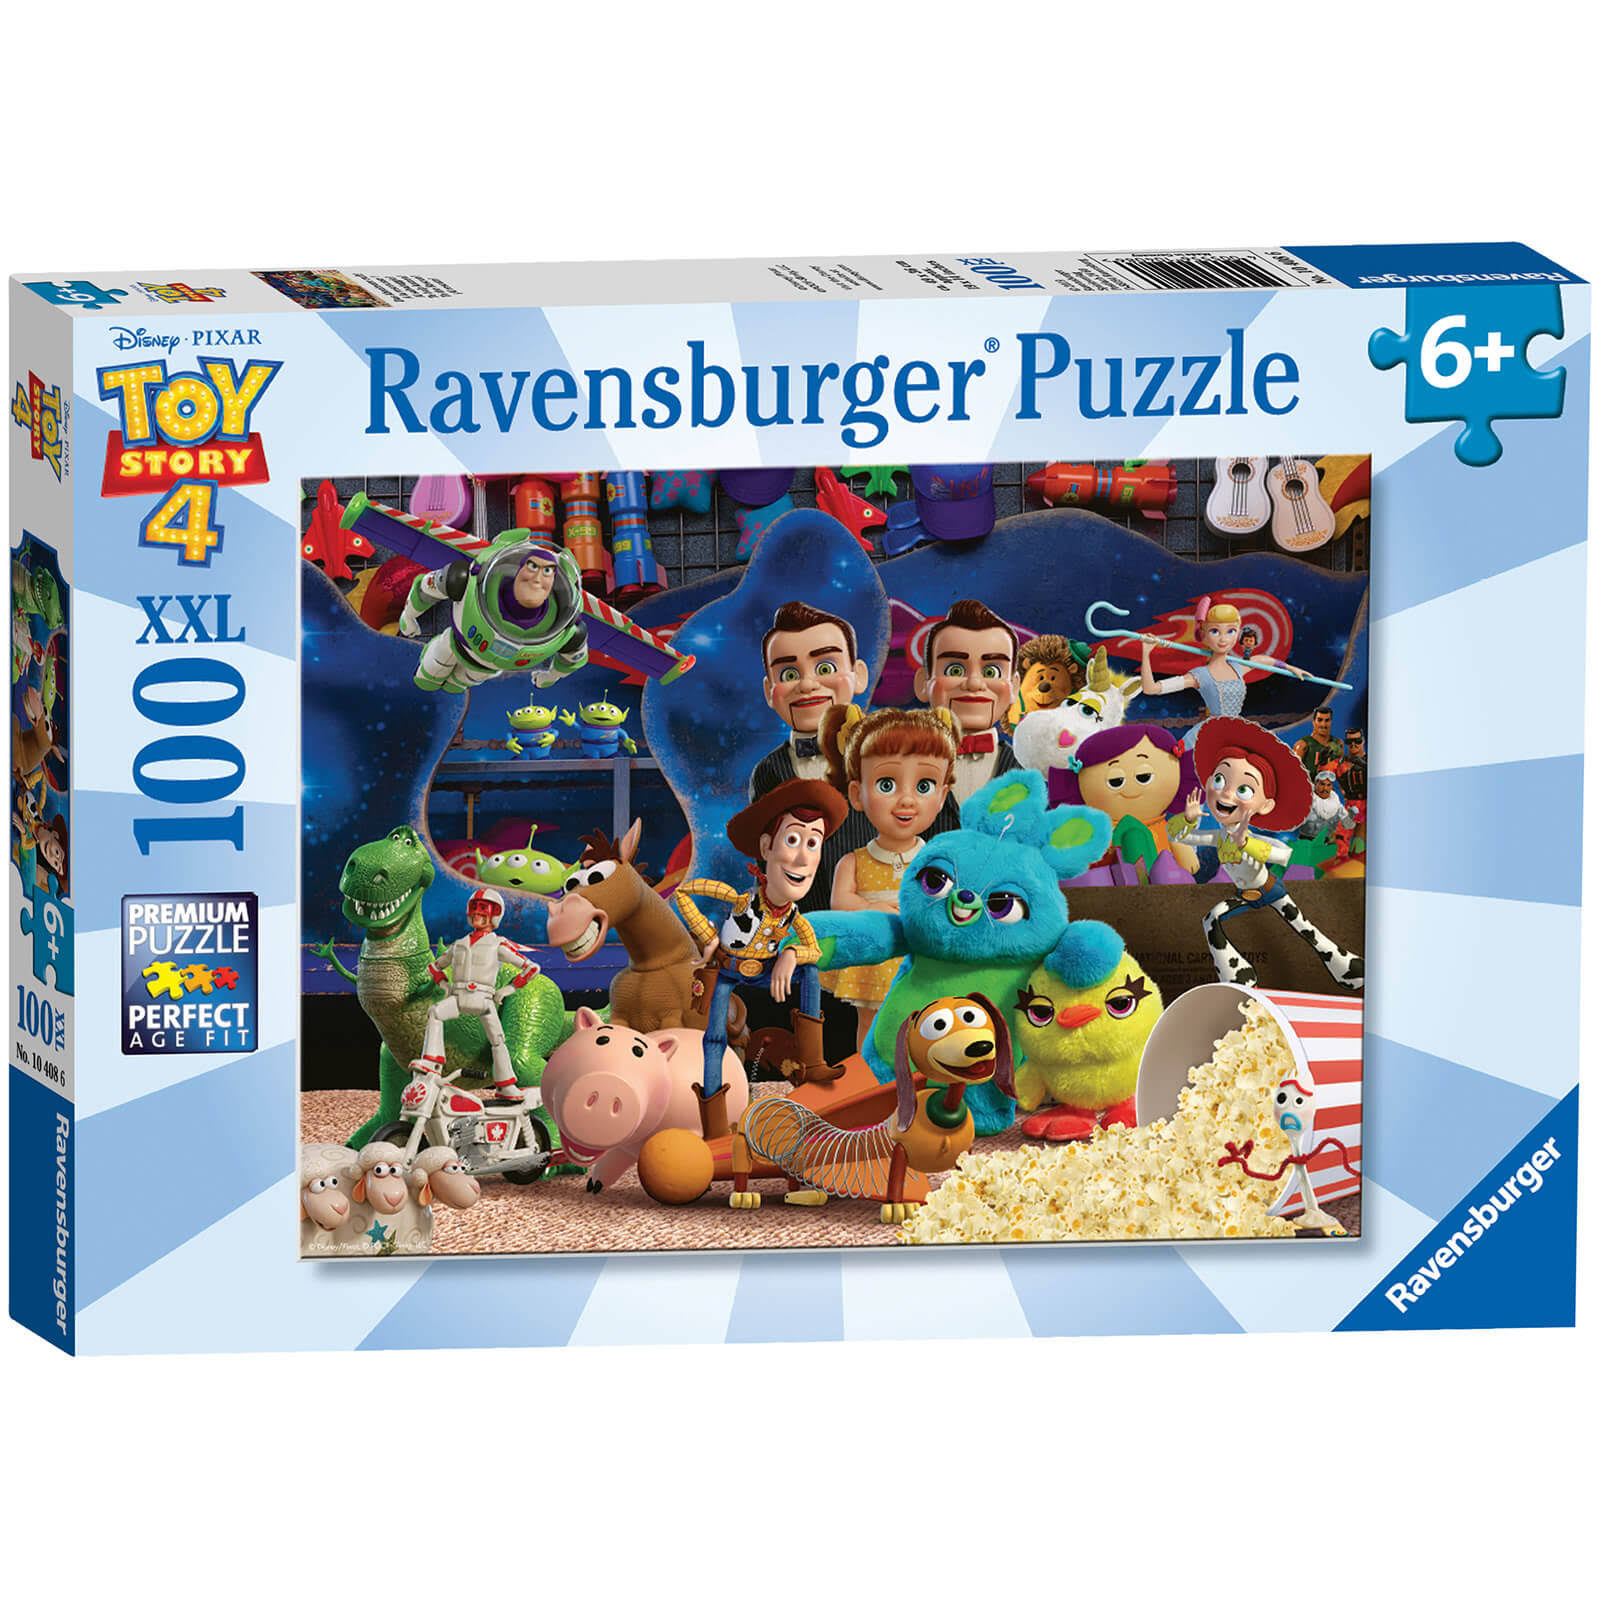 Ravensburger Toy Story 4 Puzzle Set - 100pcs Set